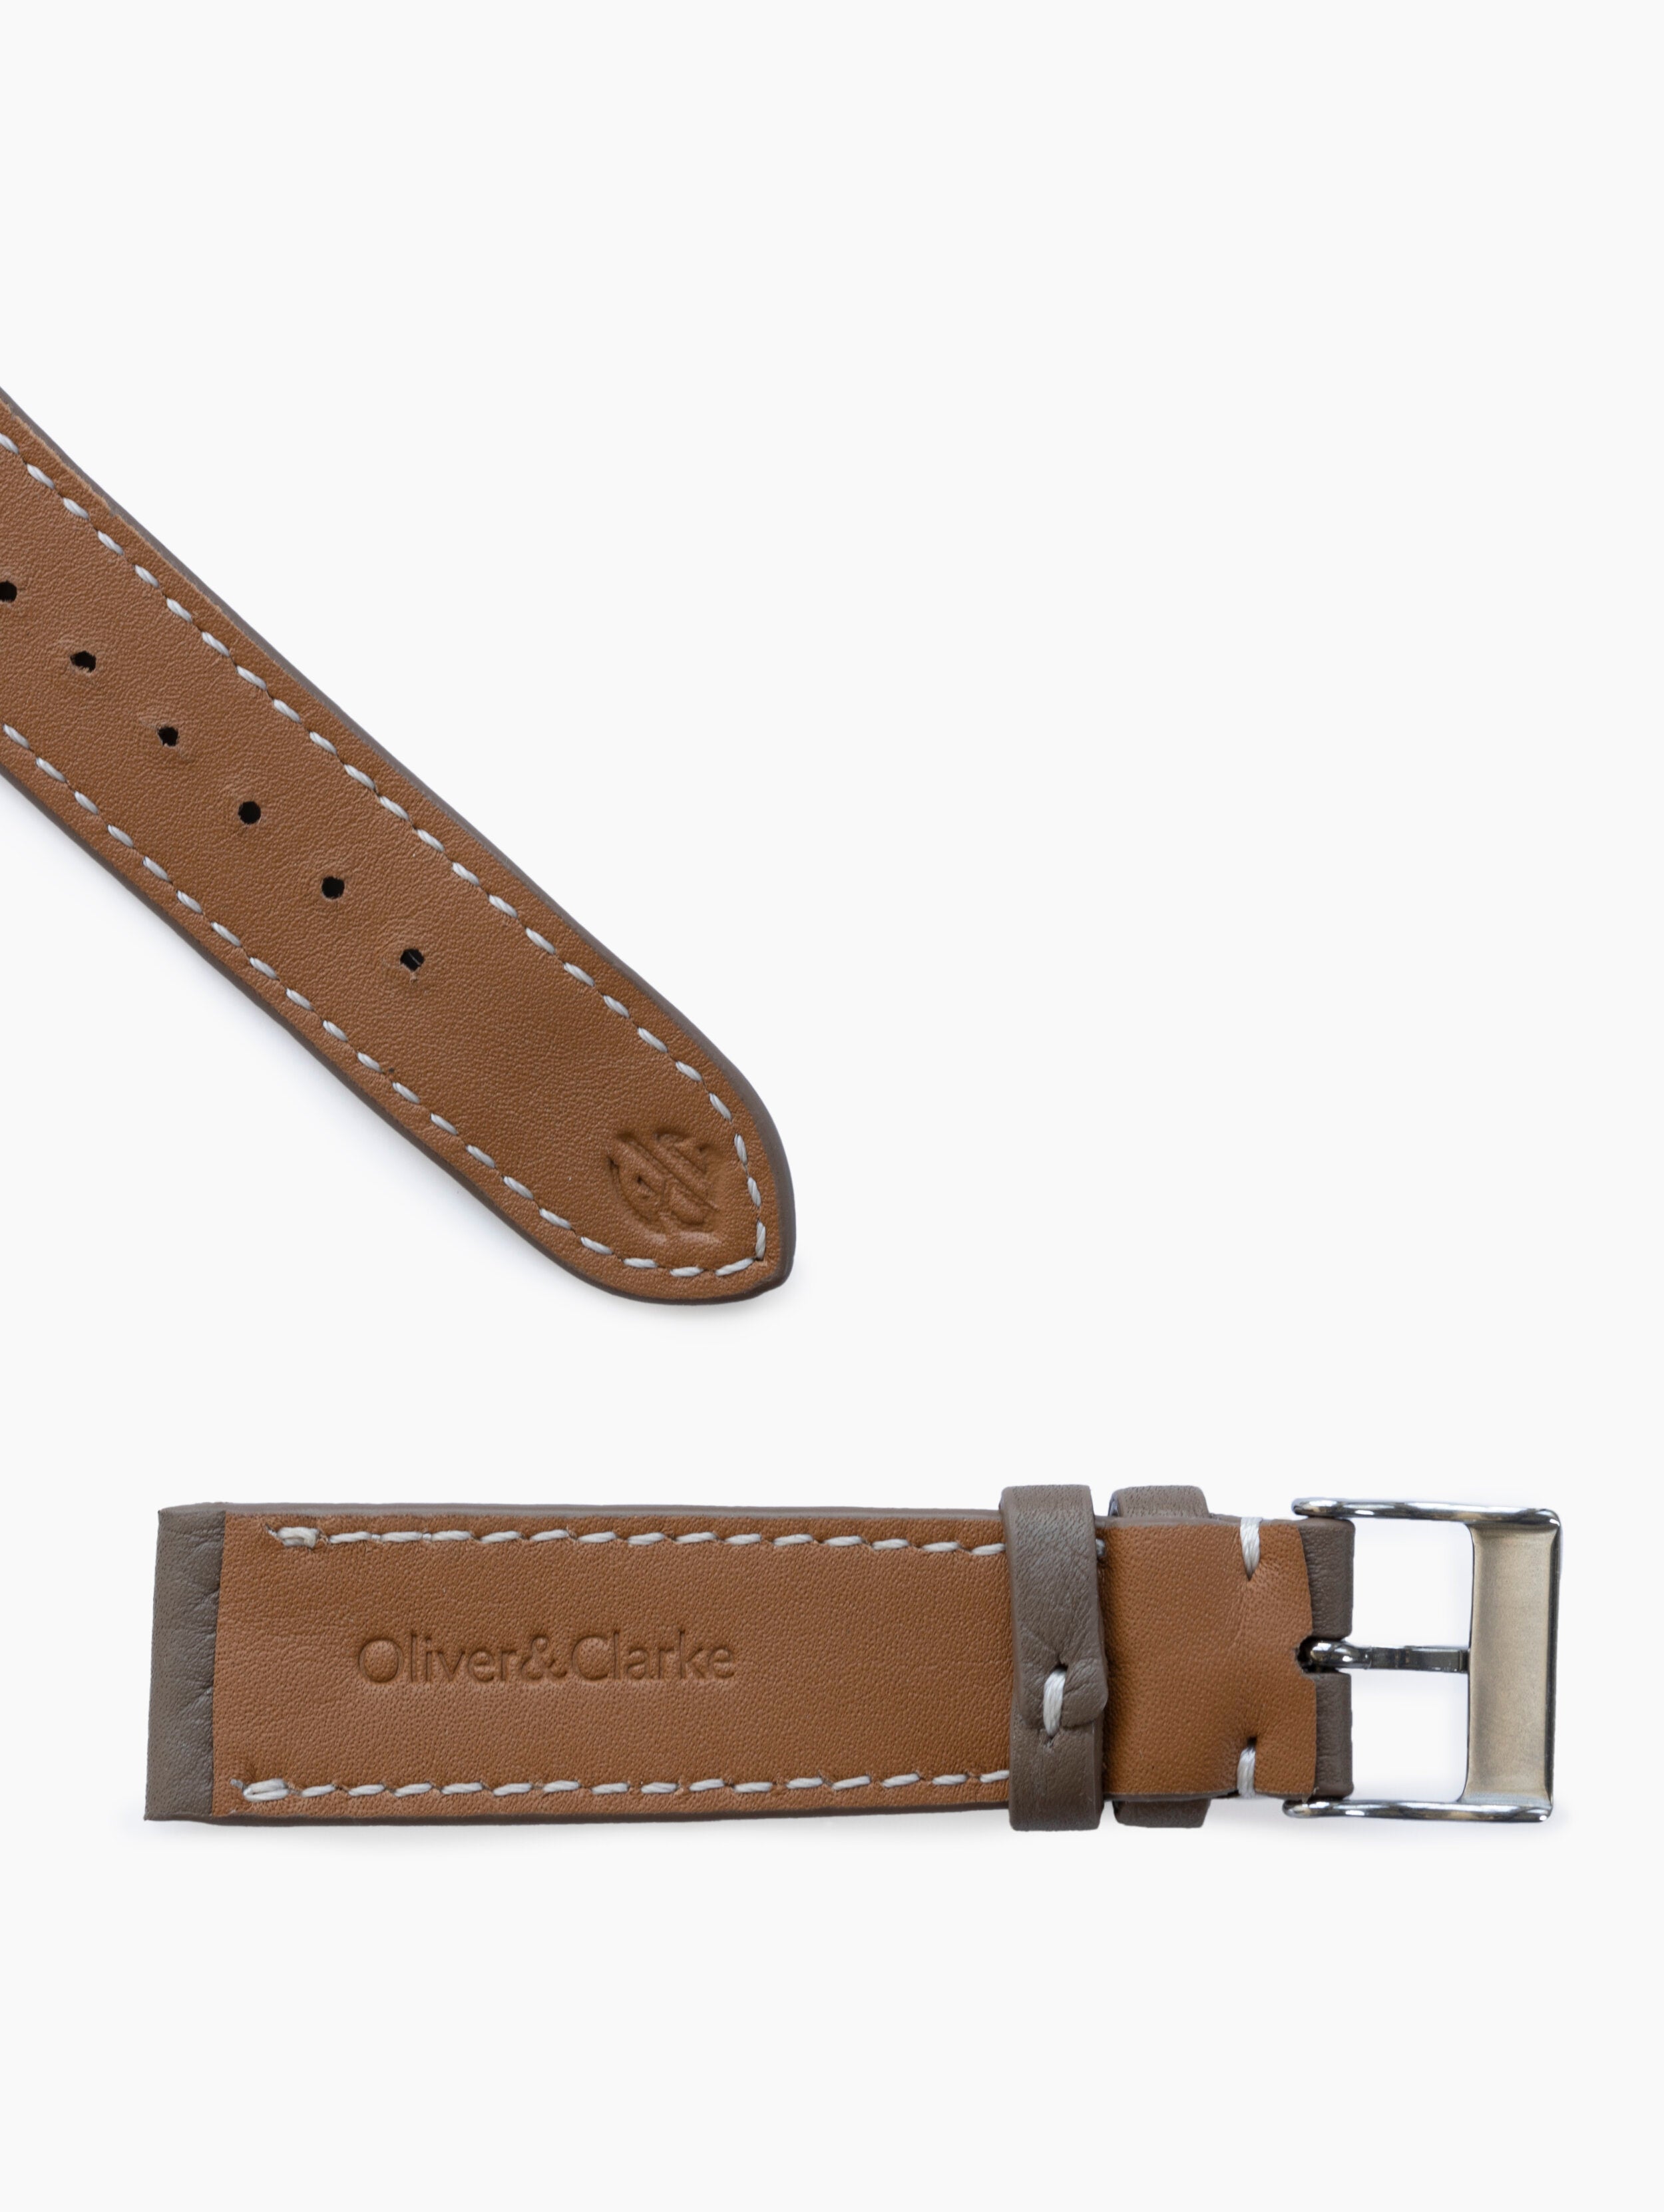 Cervo Taupe JPM x Oliver & Clarke Leather Watch Strap